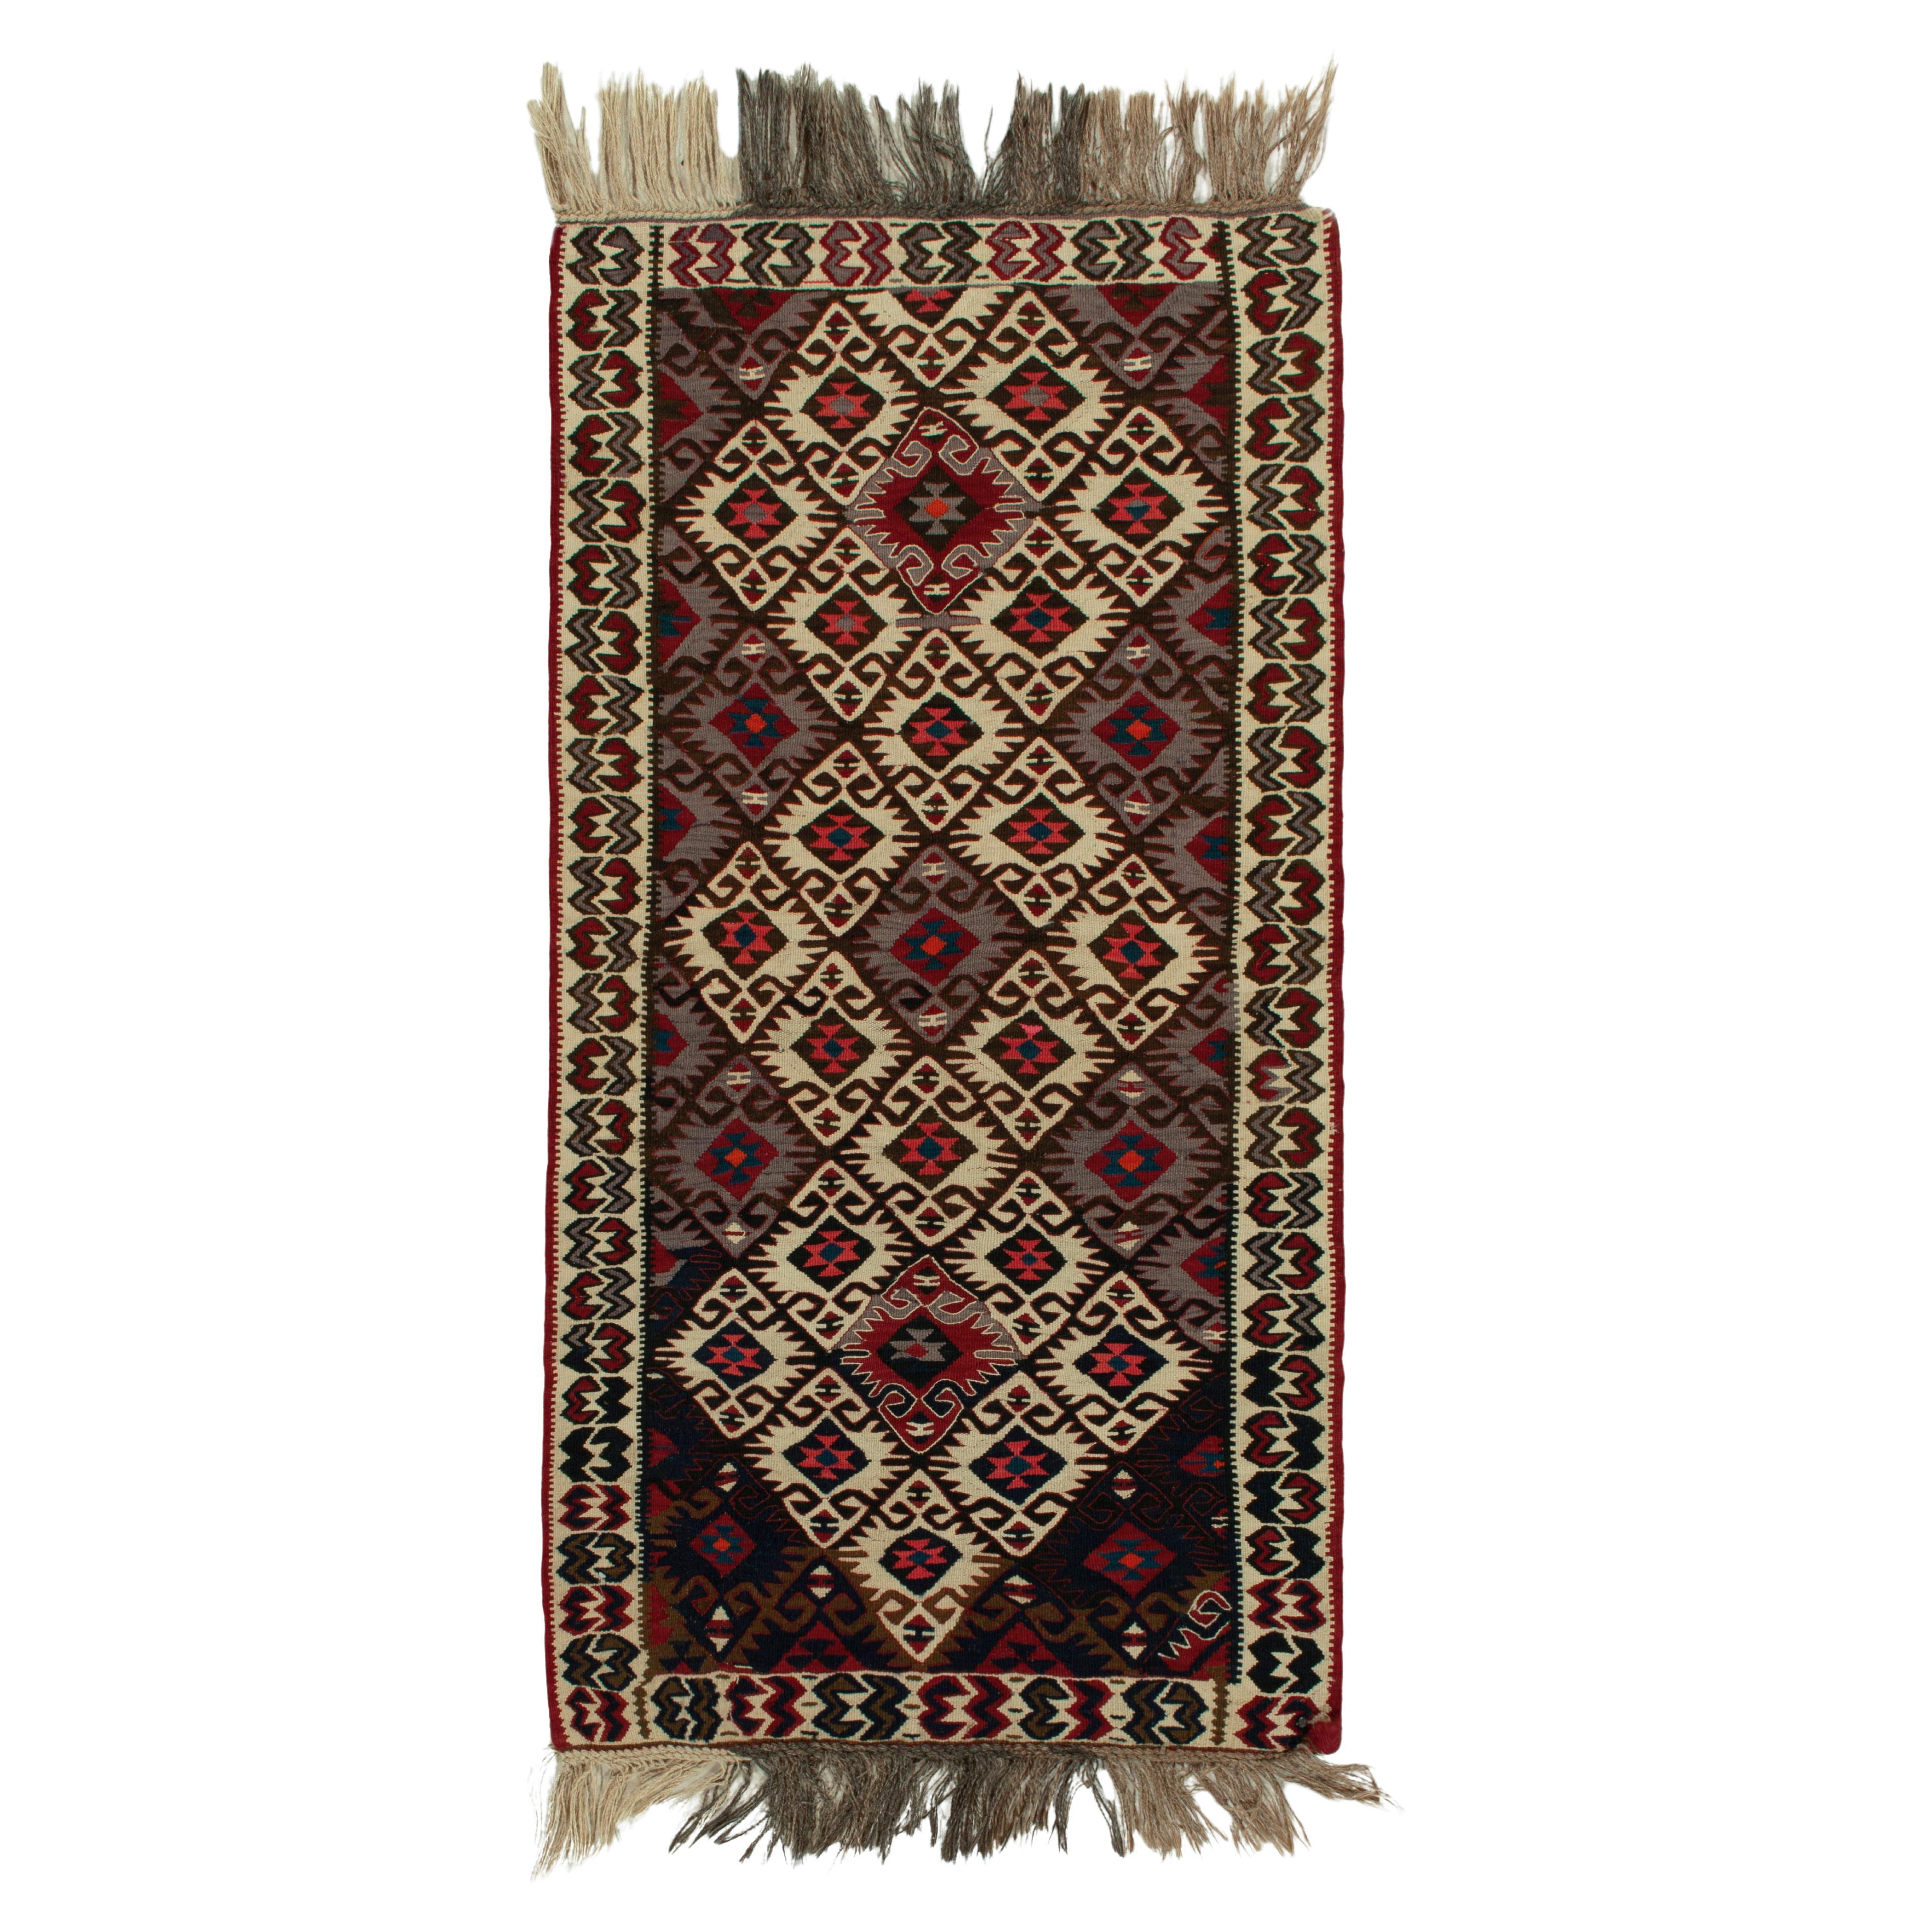 Antique Turkish Kilim Rug in Beige-Brown, Gray Tribal Pattern by Rug & Kilim For Sale